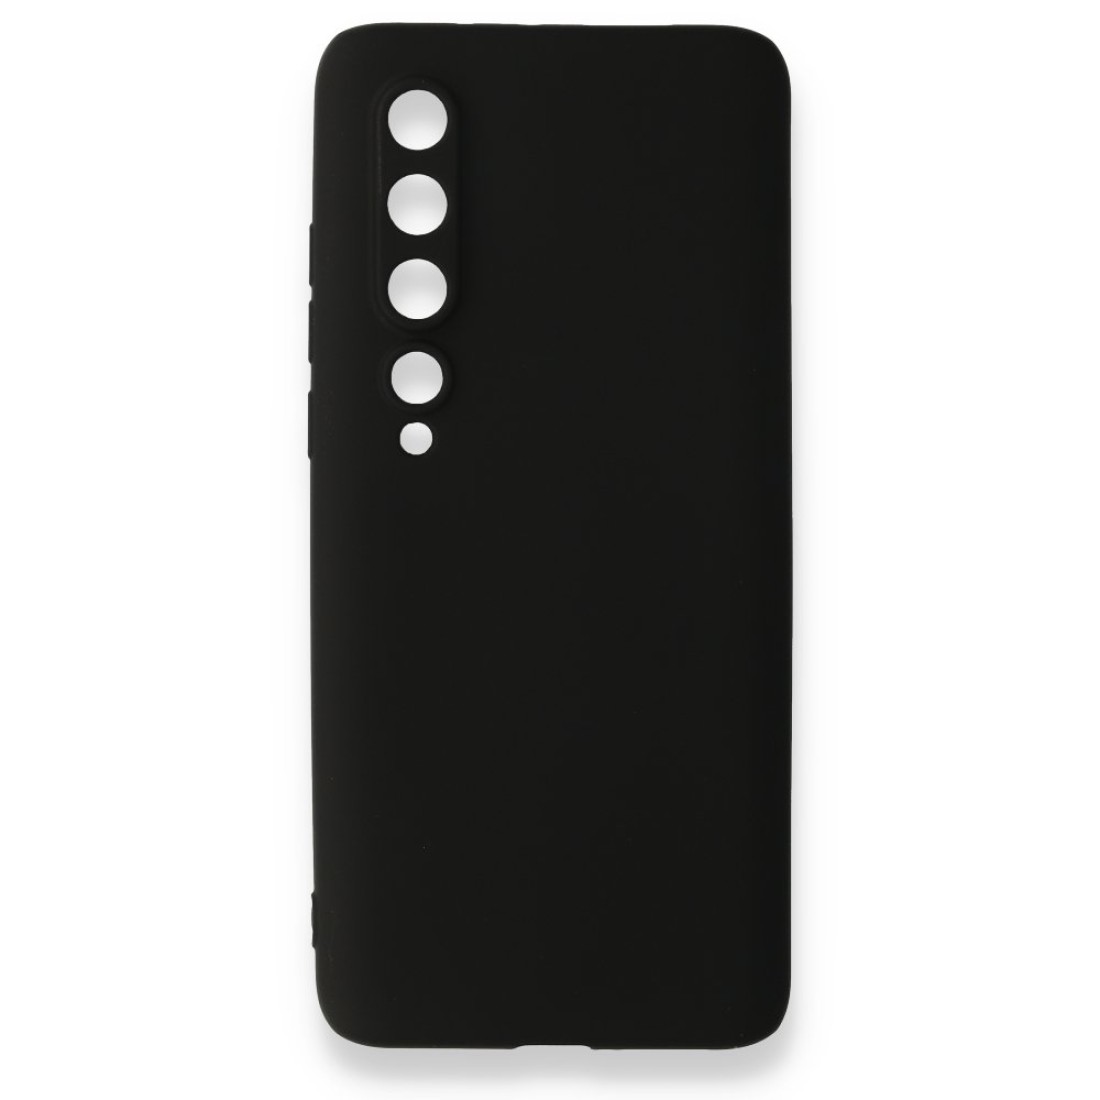 Xiaomi Mi 10 Kılıf Premium Rubber Silikon - Siyah